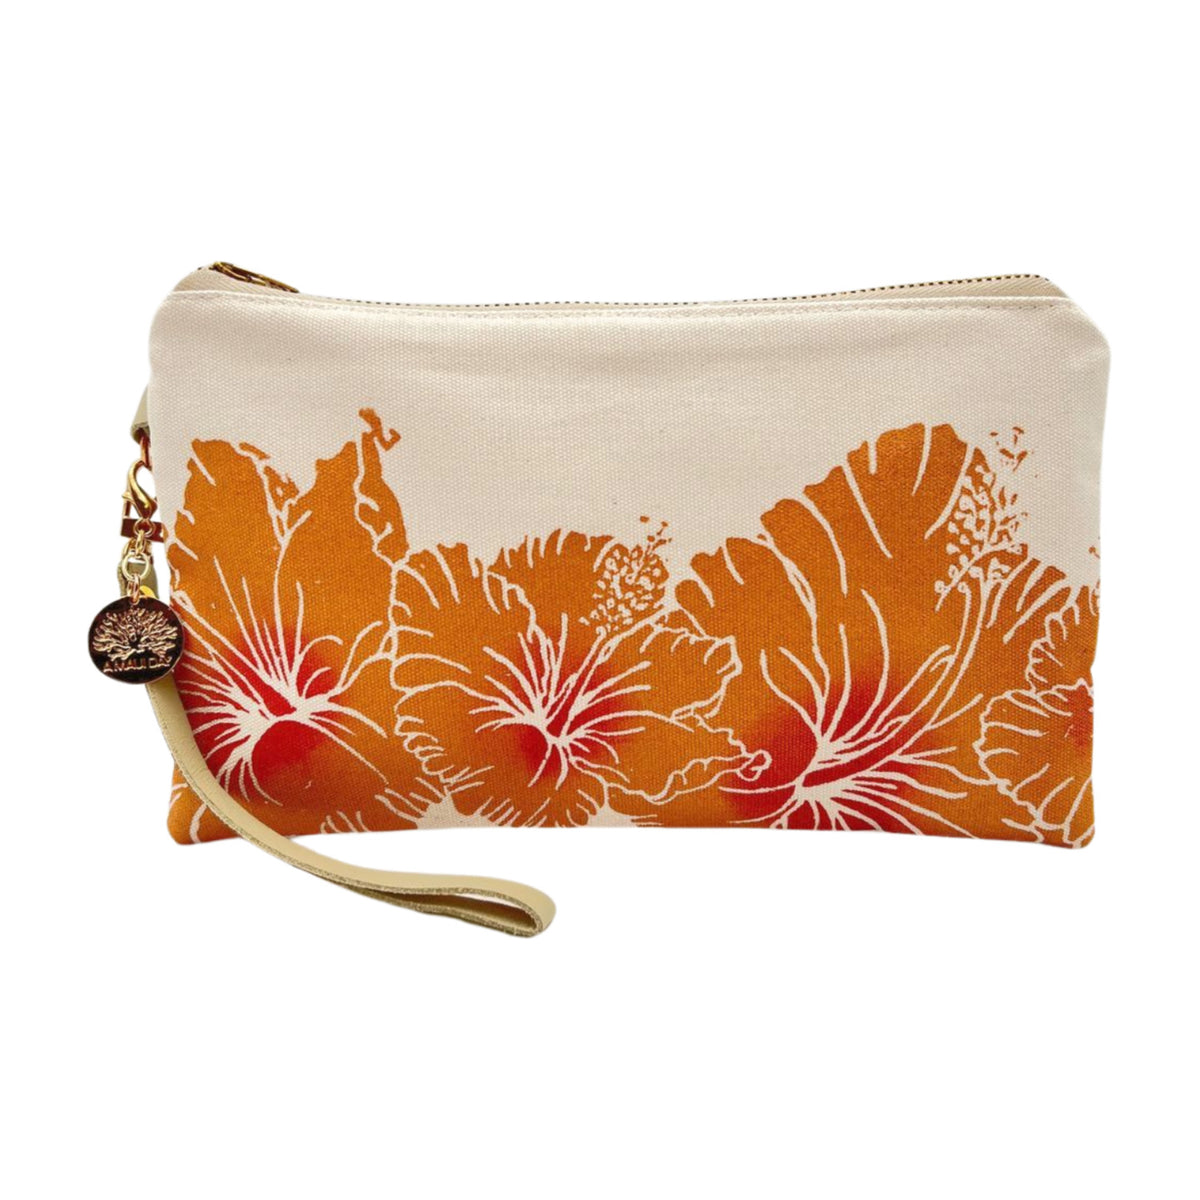 Pop-Up Mākeke - A Maui Day Original Handbags - Handprinted Small Handbag - Hibiscus on Canvas - Front View